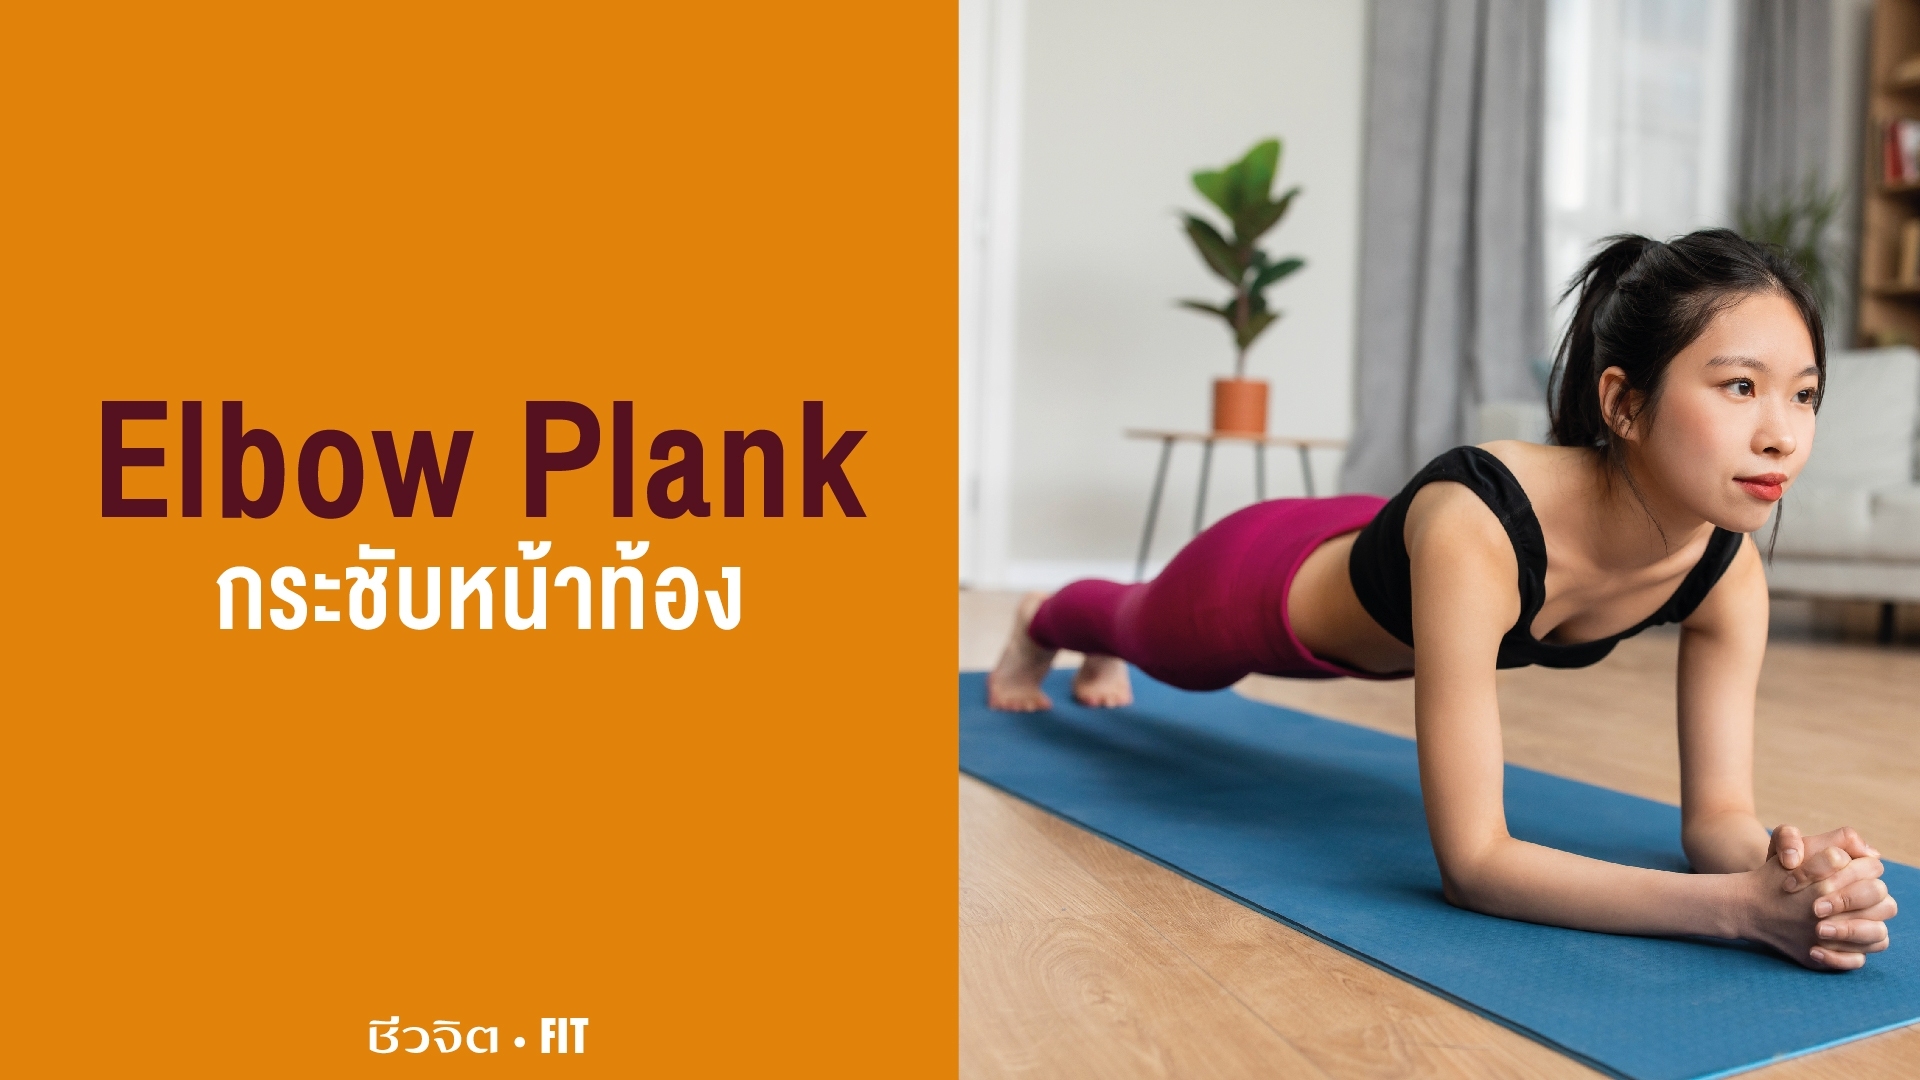 Elbow Plank กระชับหน้าท้อง